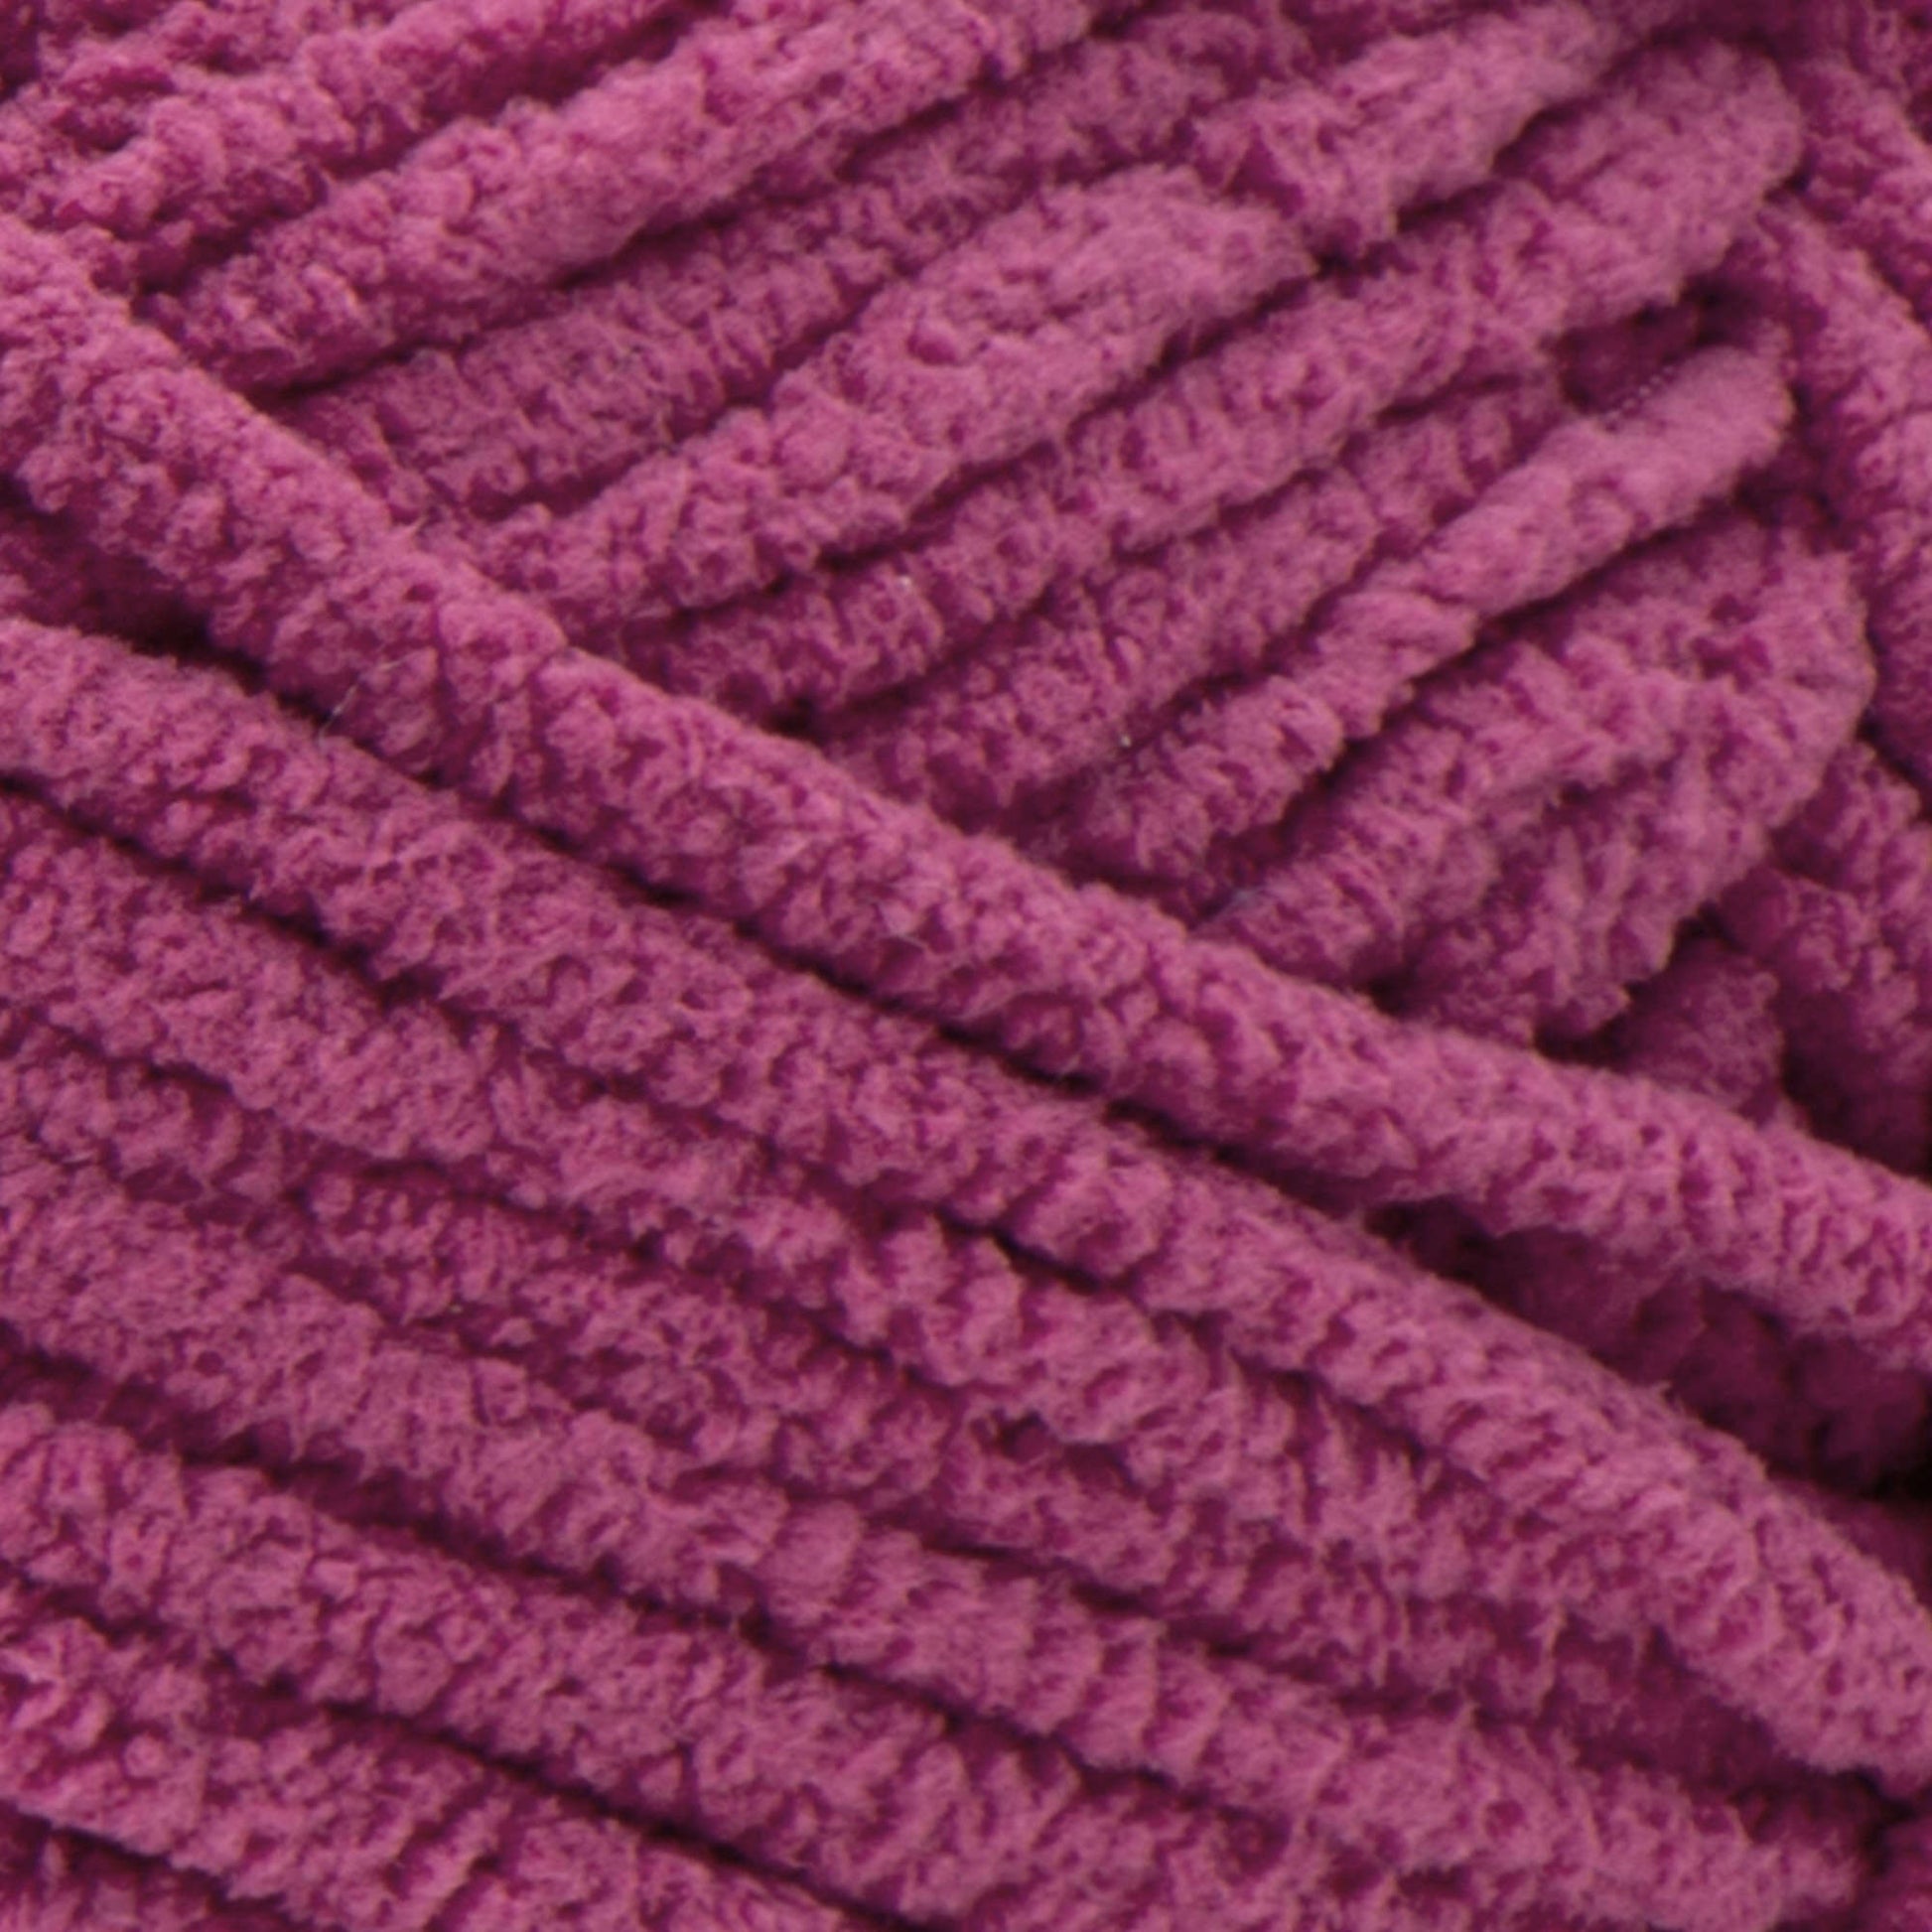 Bernat Blanket Yarn (300g/10.5oz) Deep Fuchsia